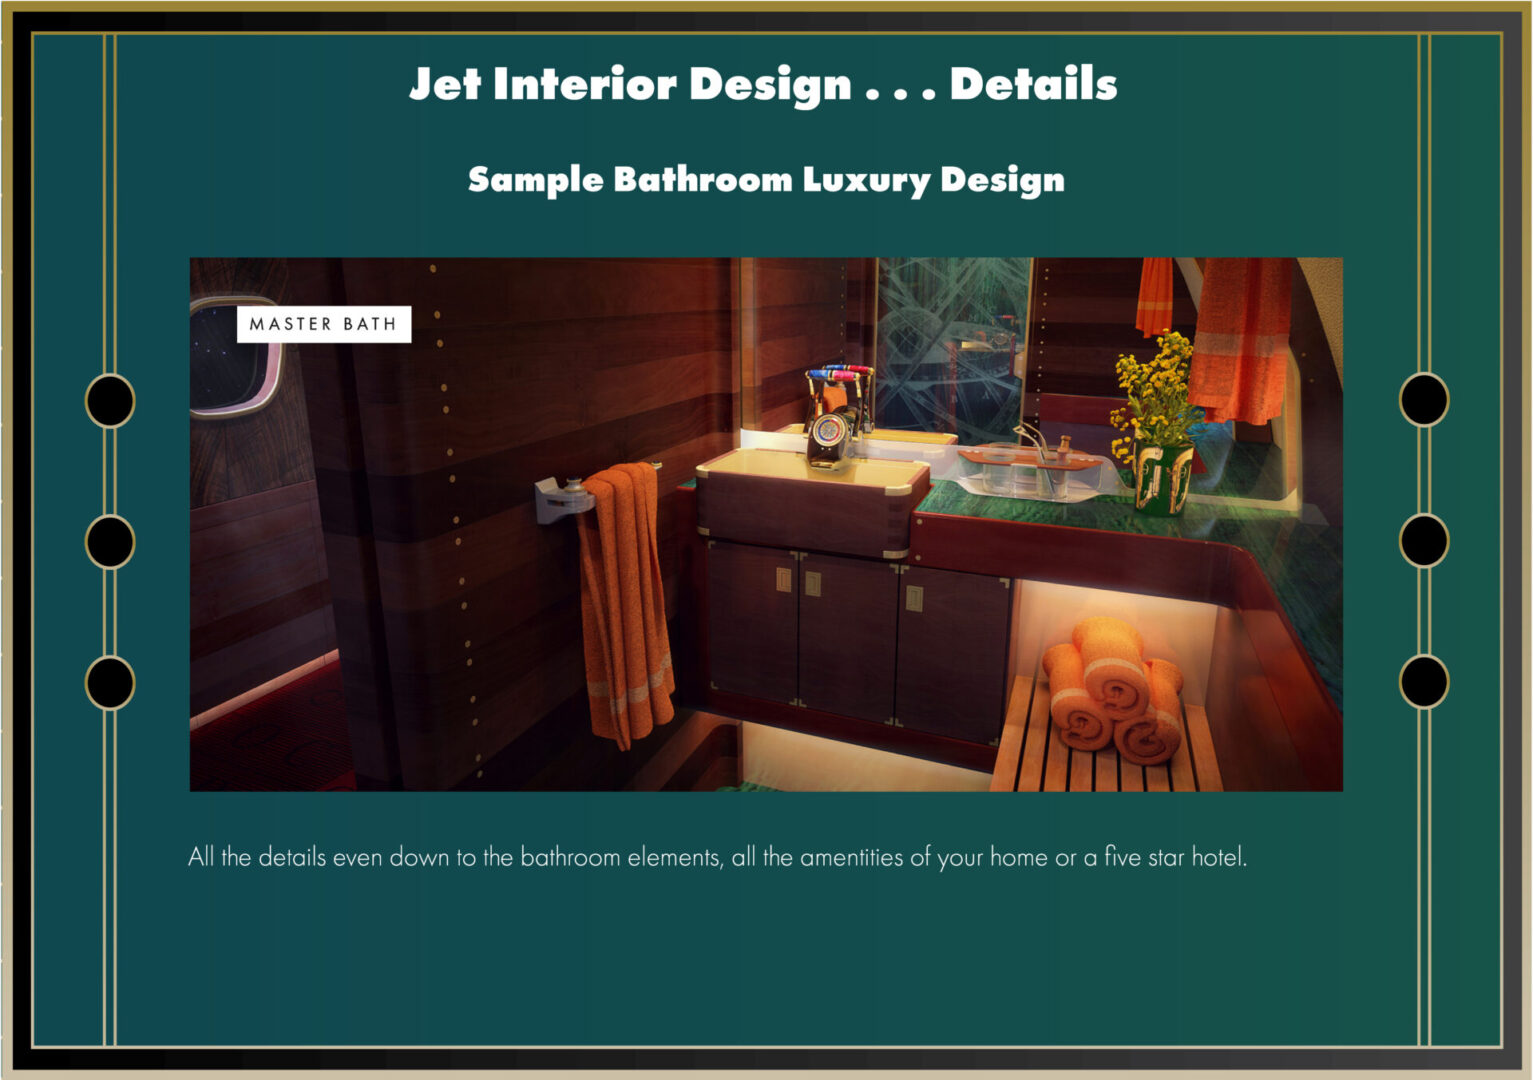 Jet Interior Design sample for a luxury bathroom